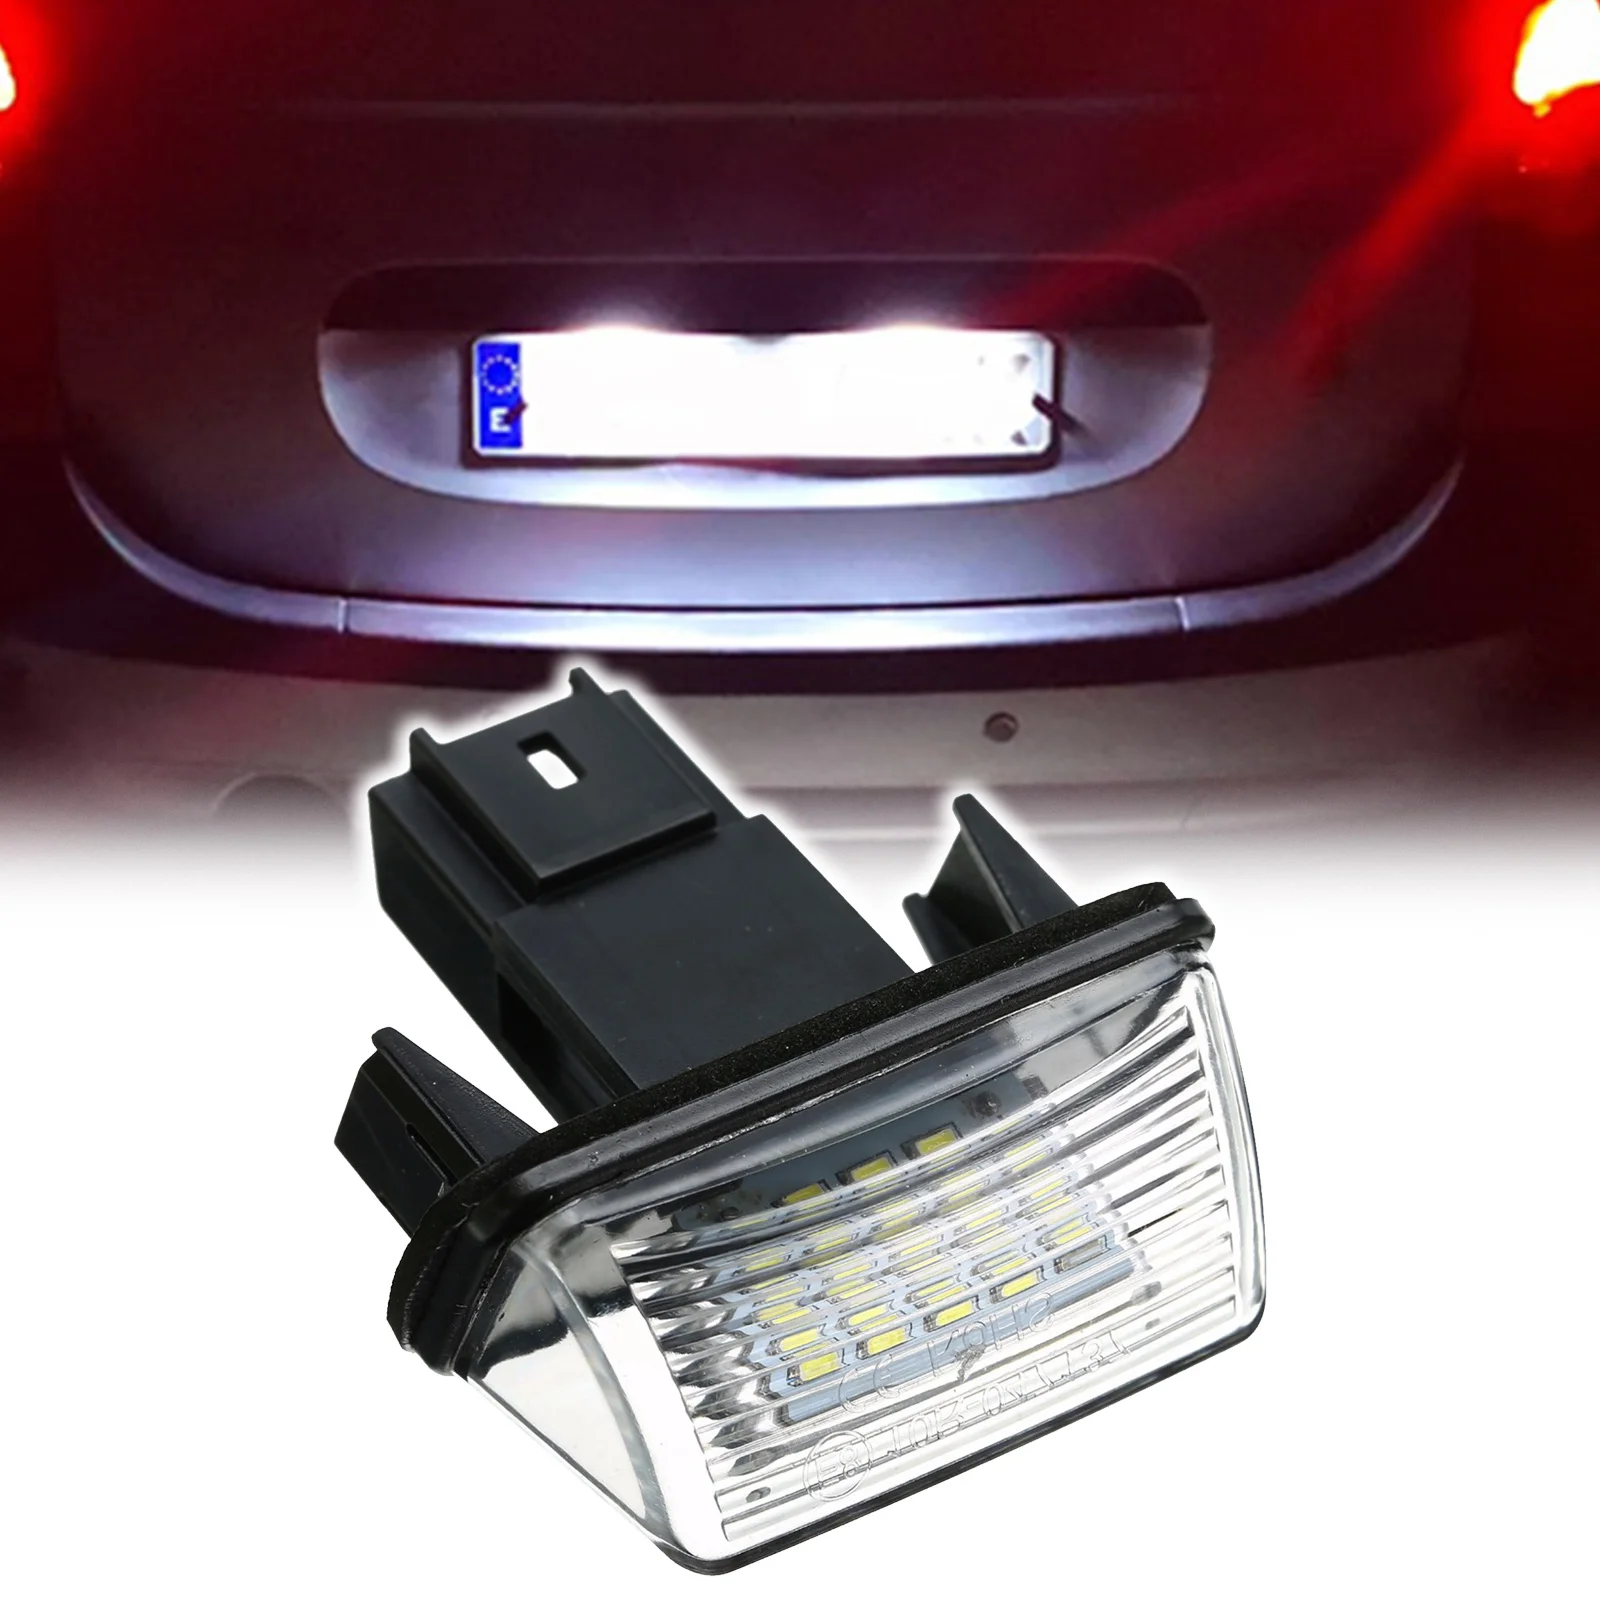 

2x HID License Number Plate Light For Peugeot 206 207 306 307 308 5008 For Citroen C3 C4 C5 Berlingo Saxo Xsara Picasso Parts